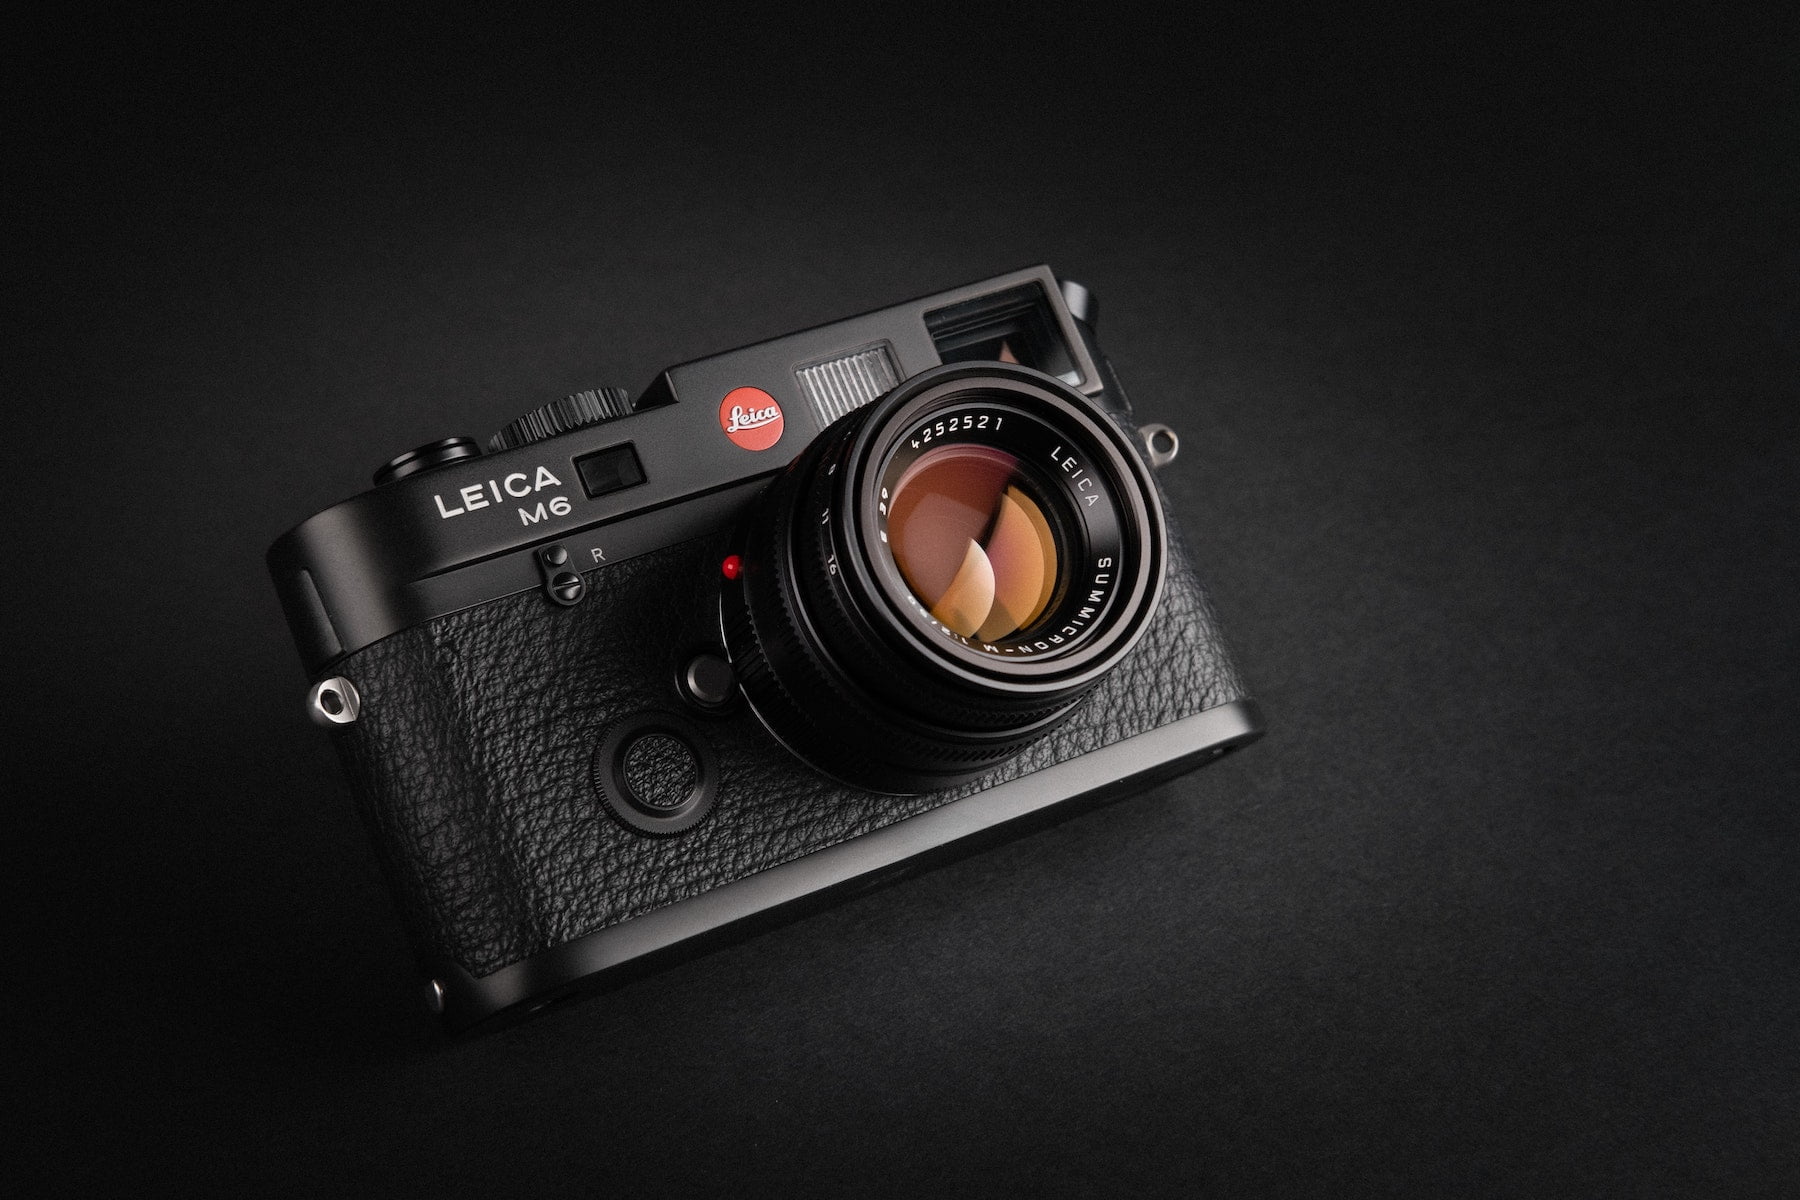 Leica has reissued the iconic M6 film camera